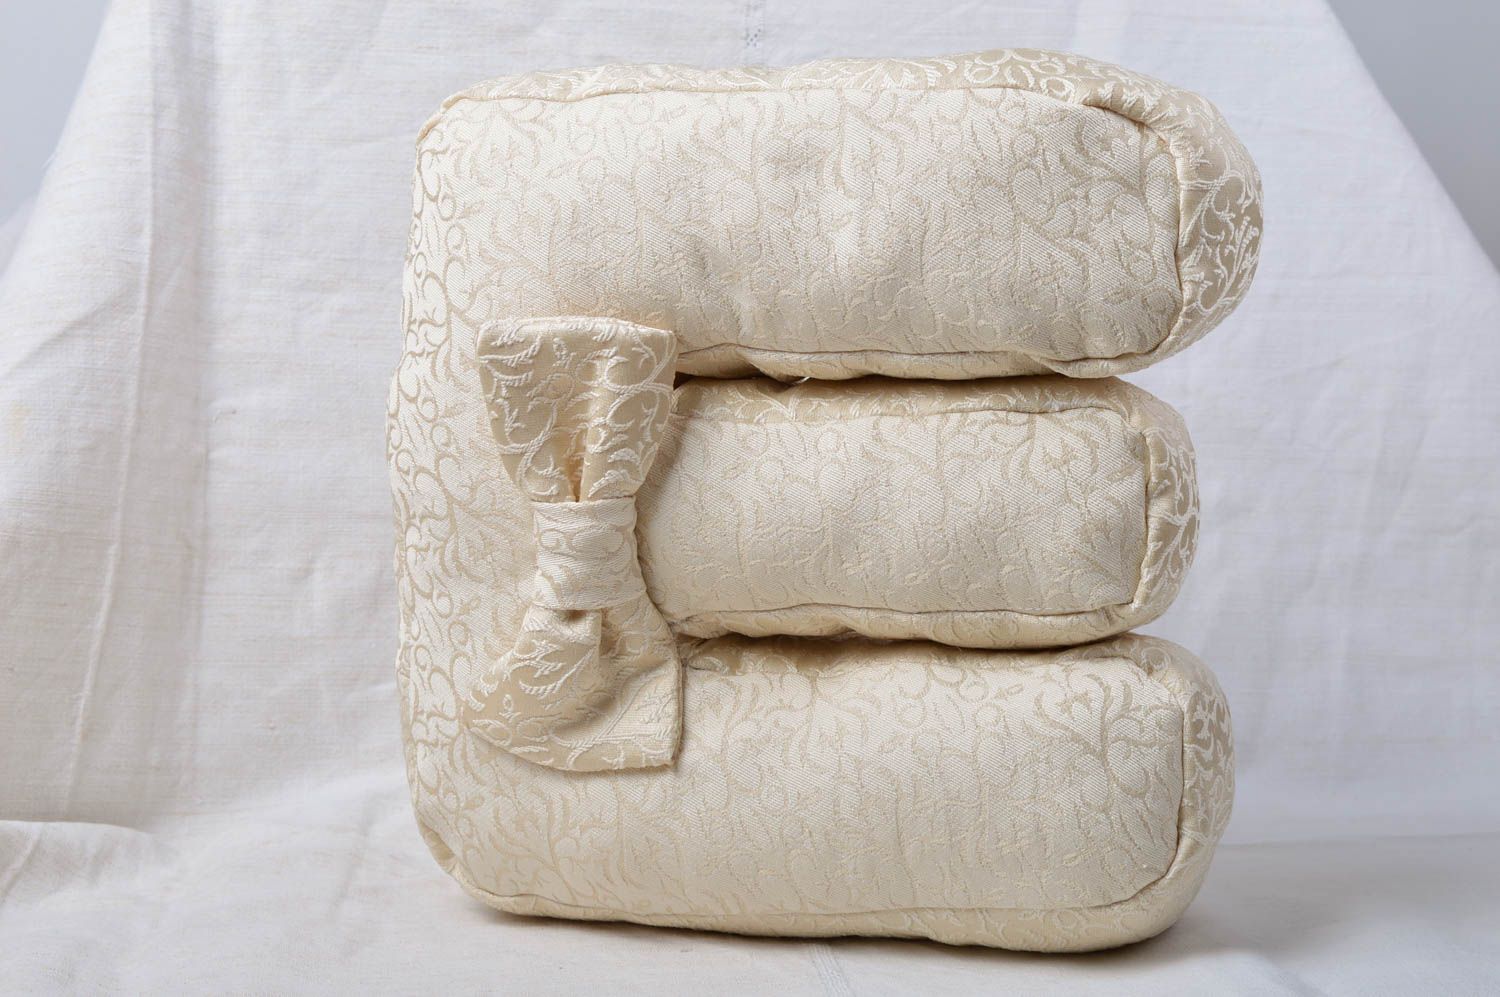 Handmade throw pillow E decorative pillow design home textiles for decor only photo 1